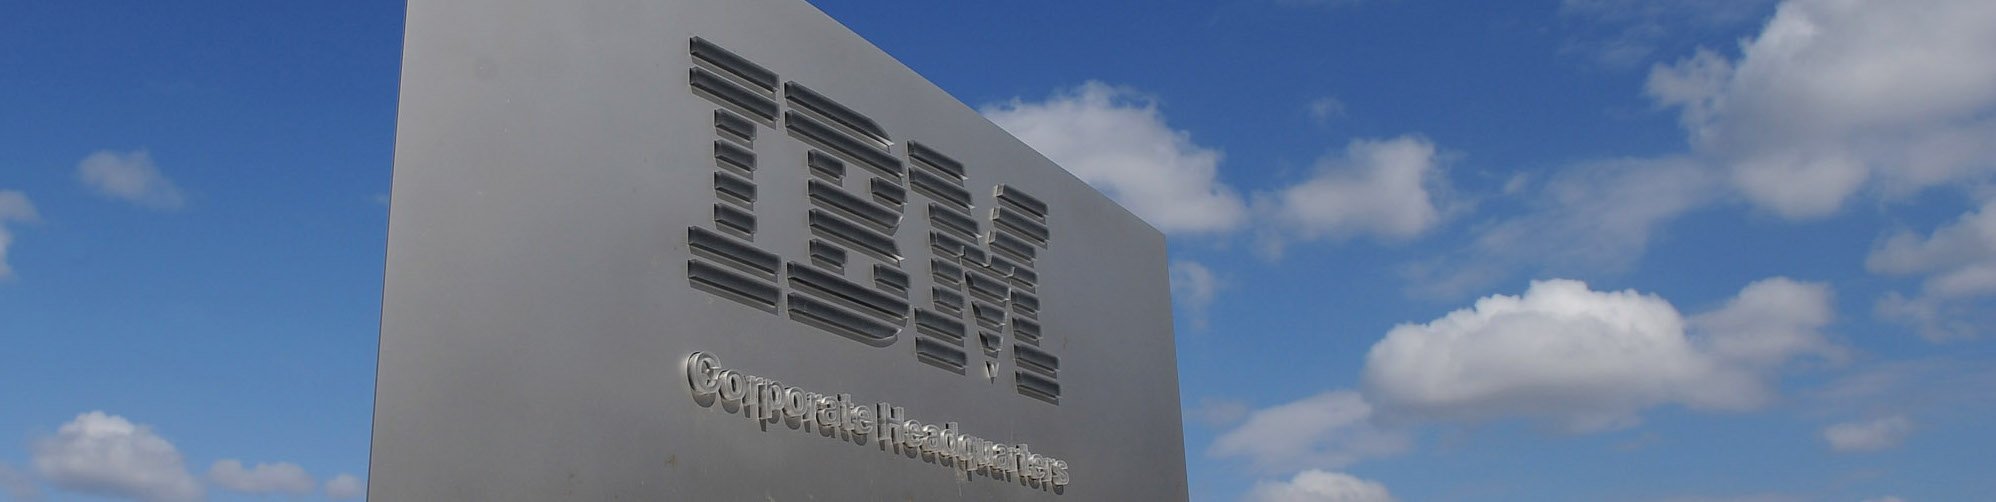 IBM cover image